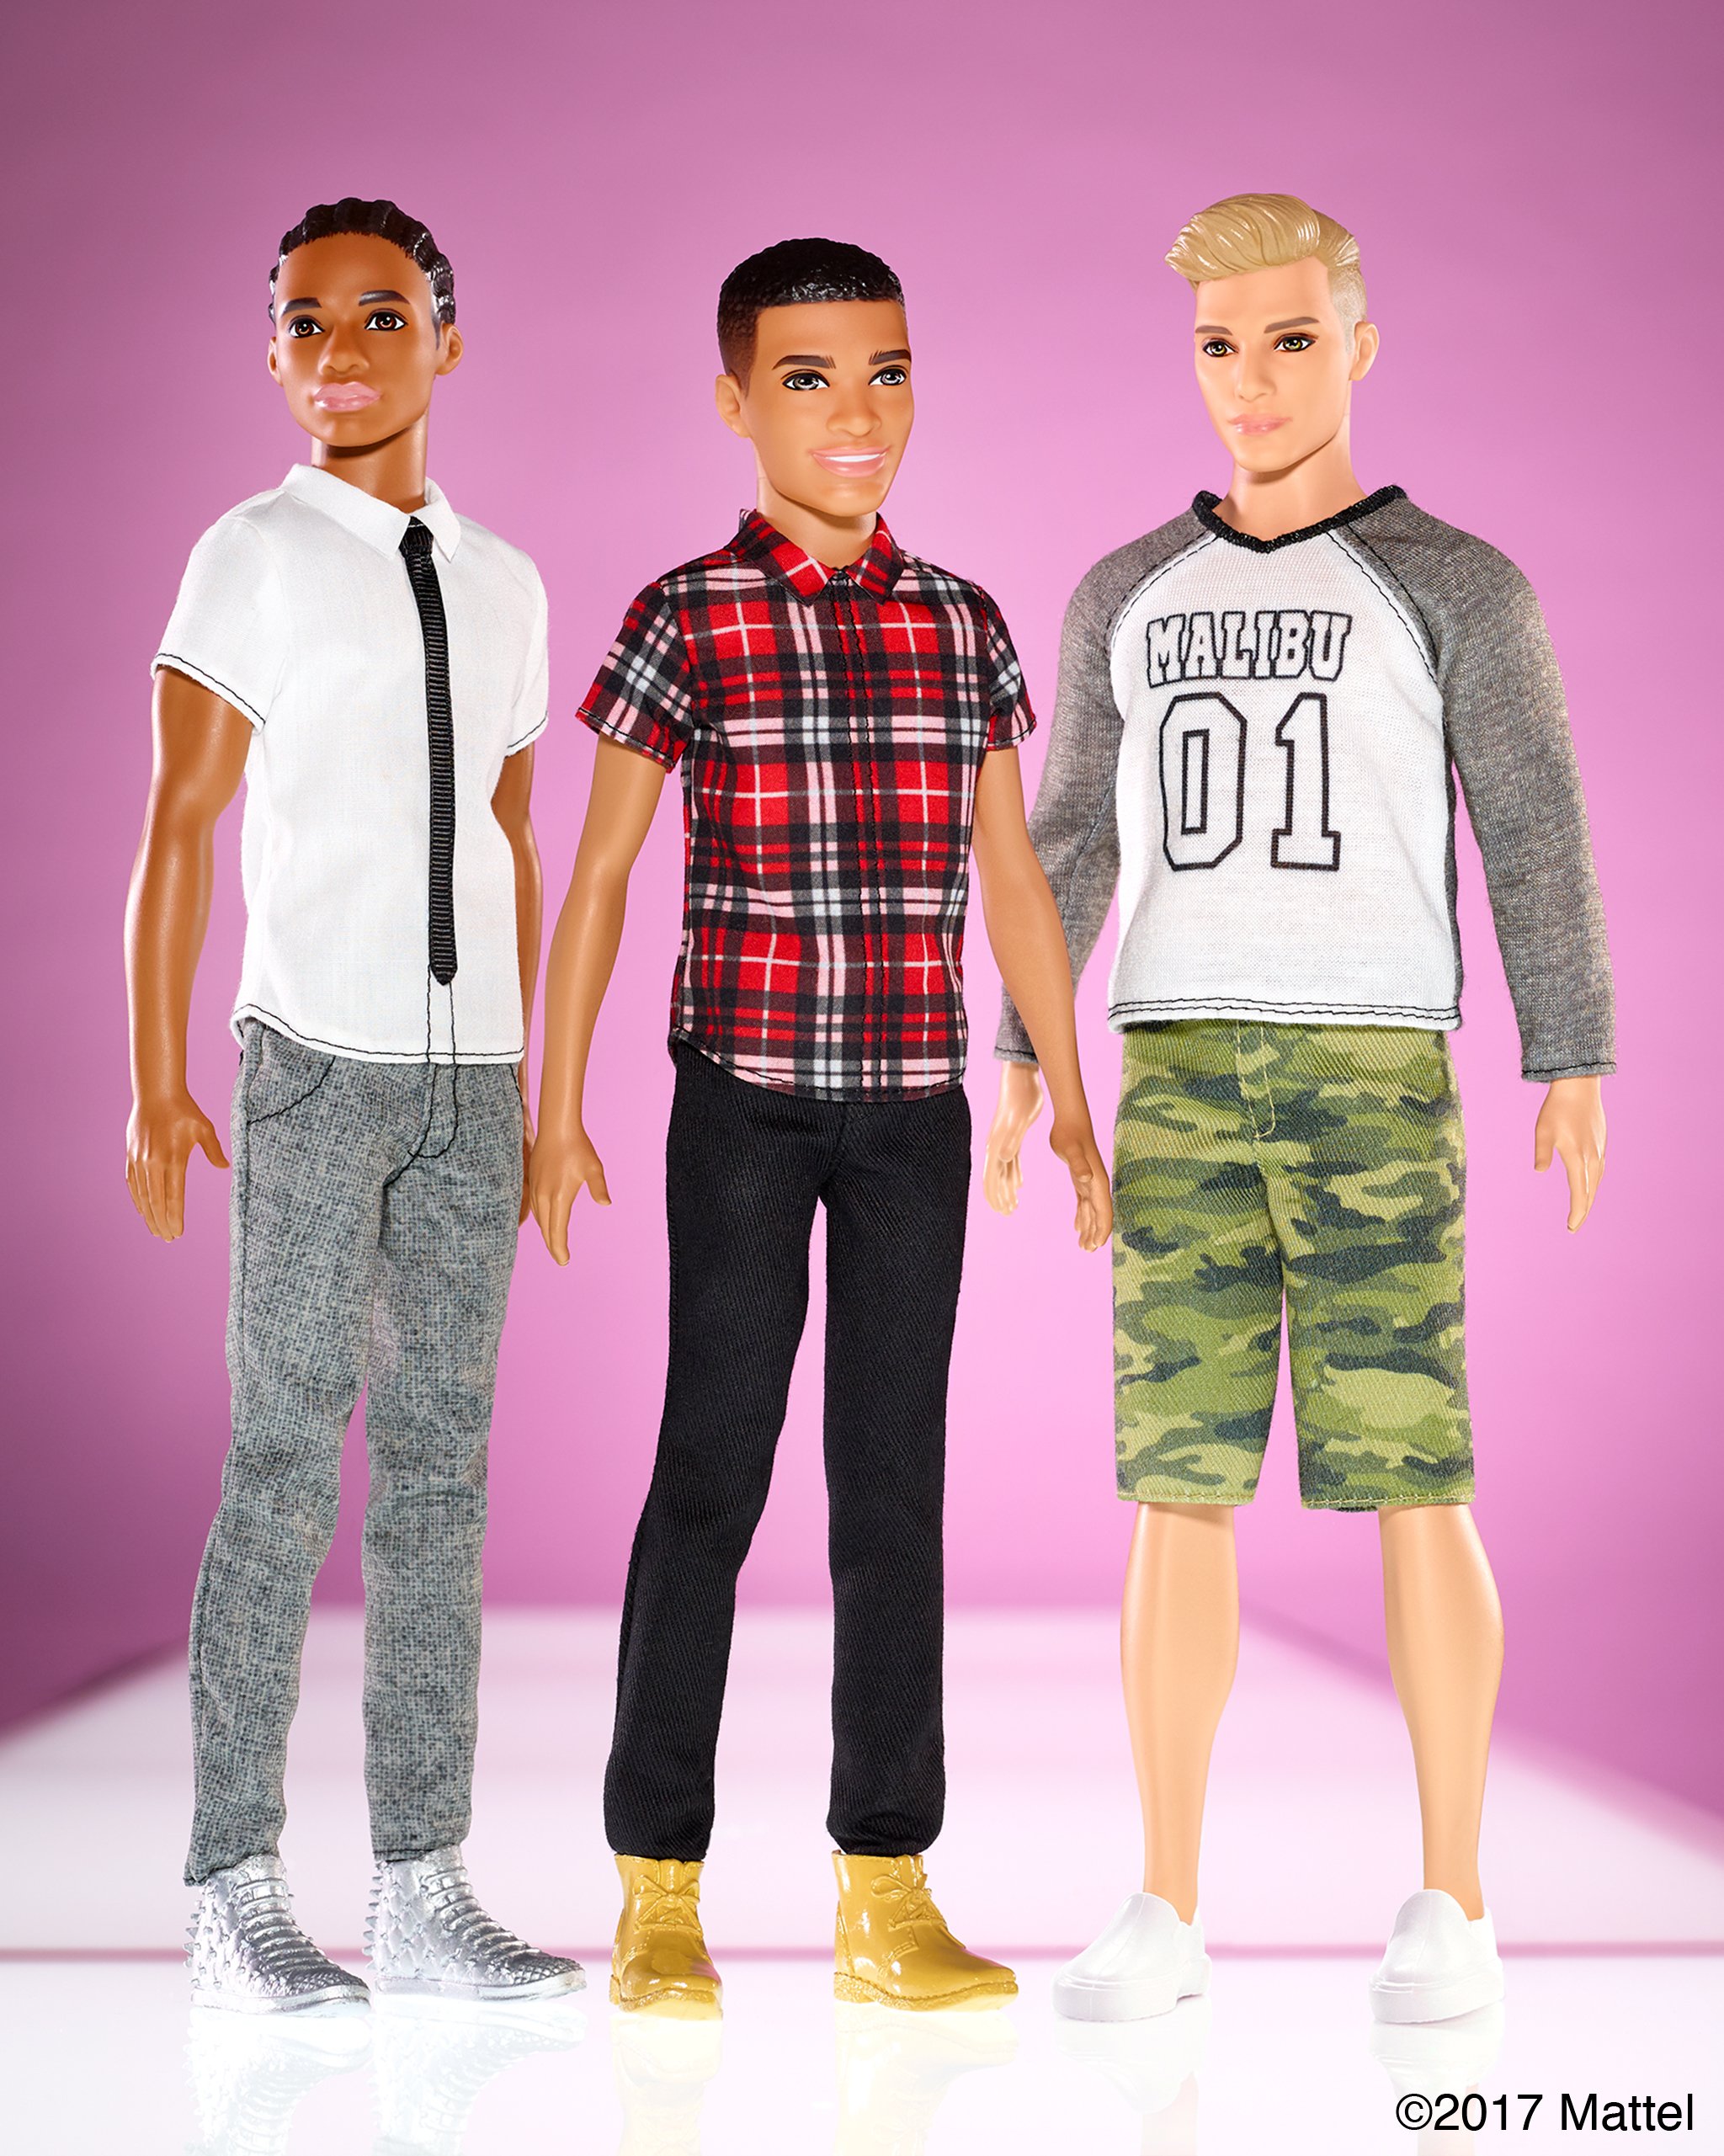 Attent hoog bekennen Barbie on Twitter: "Meet Next Gen Ken! Ken is now available in 3 body  types–broad, slim, and original. #TheDollEvolves https://t.co/svI1mbvDMP" /  Twitter